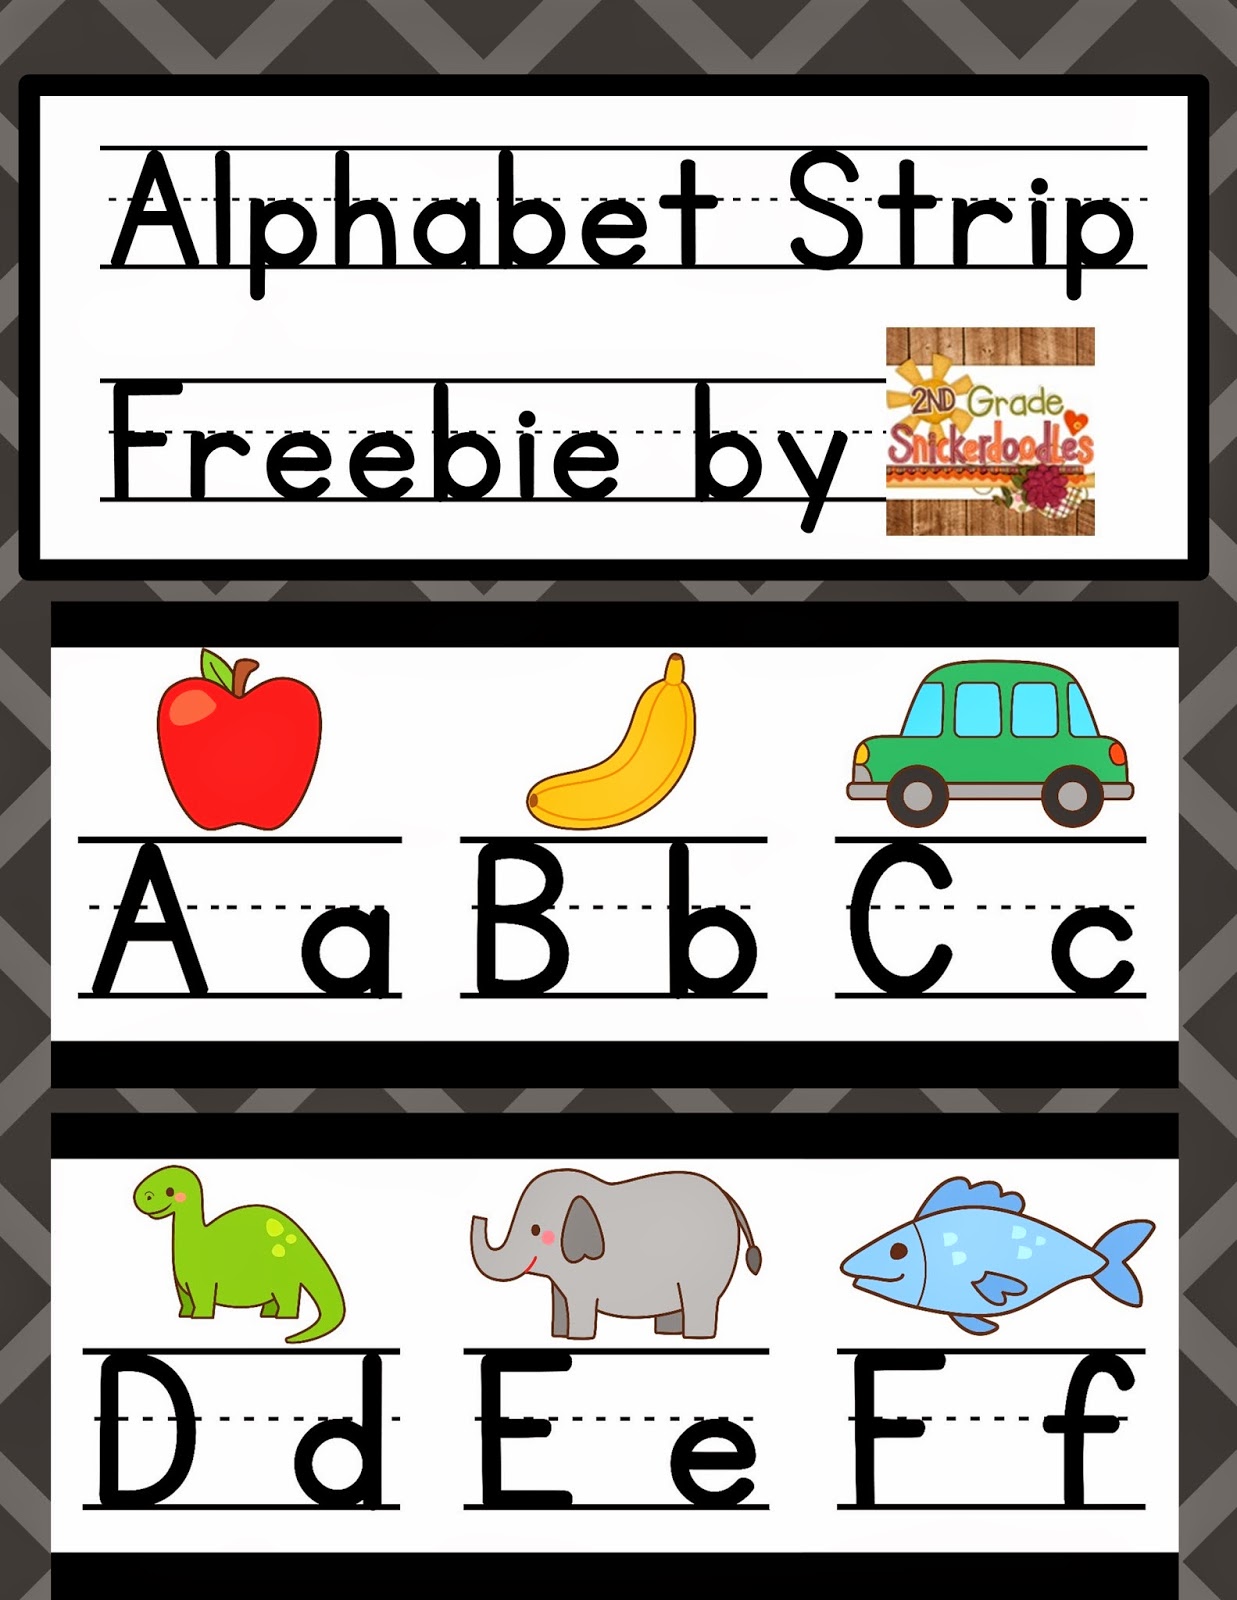 2nd-grade-snickerdoodles-alphabet-strip-posters-freebie